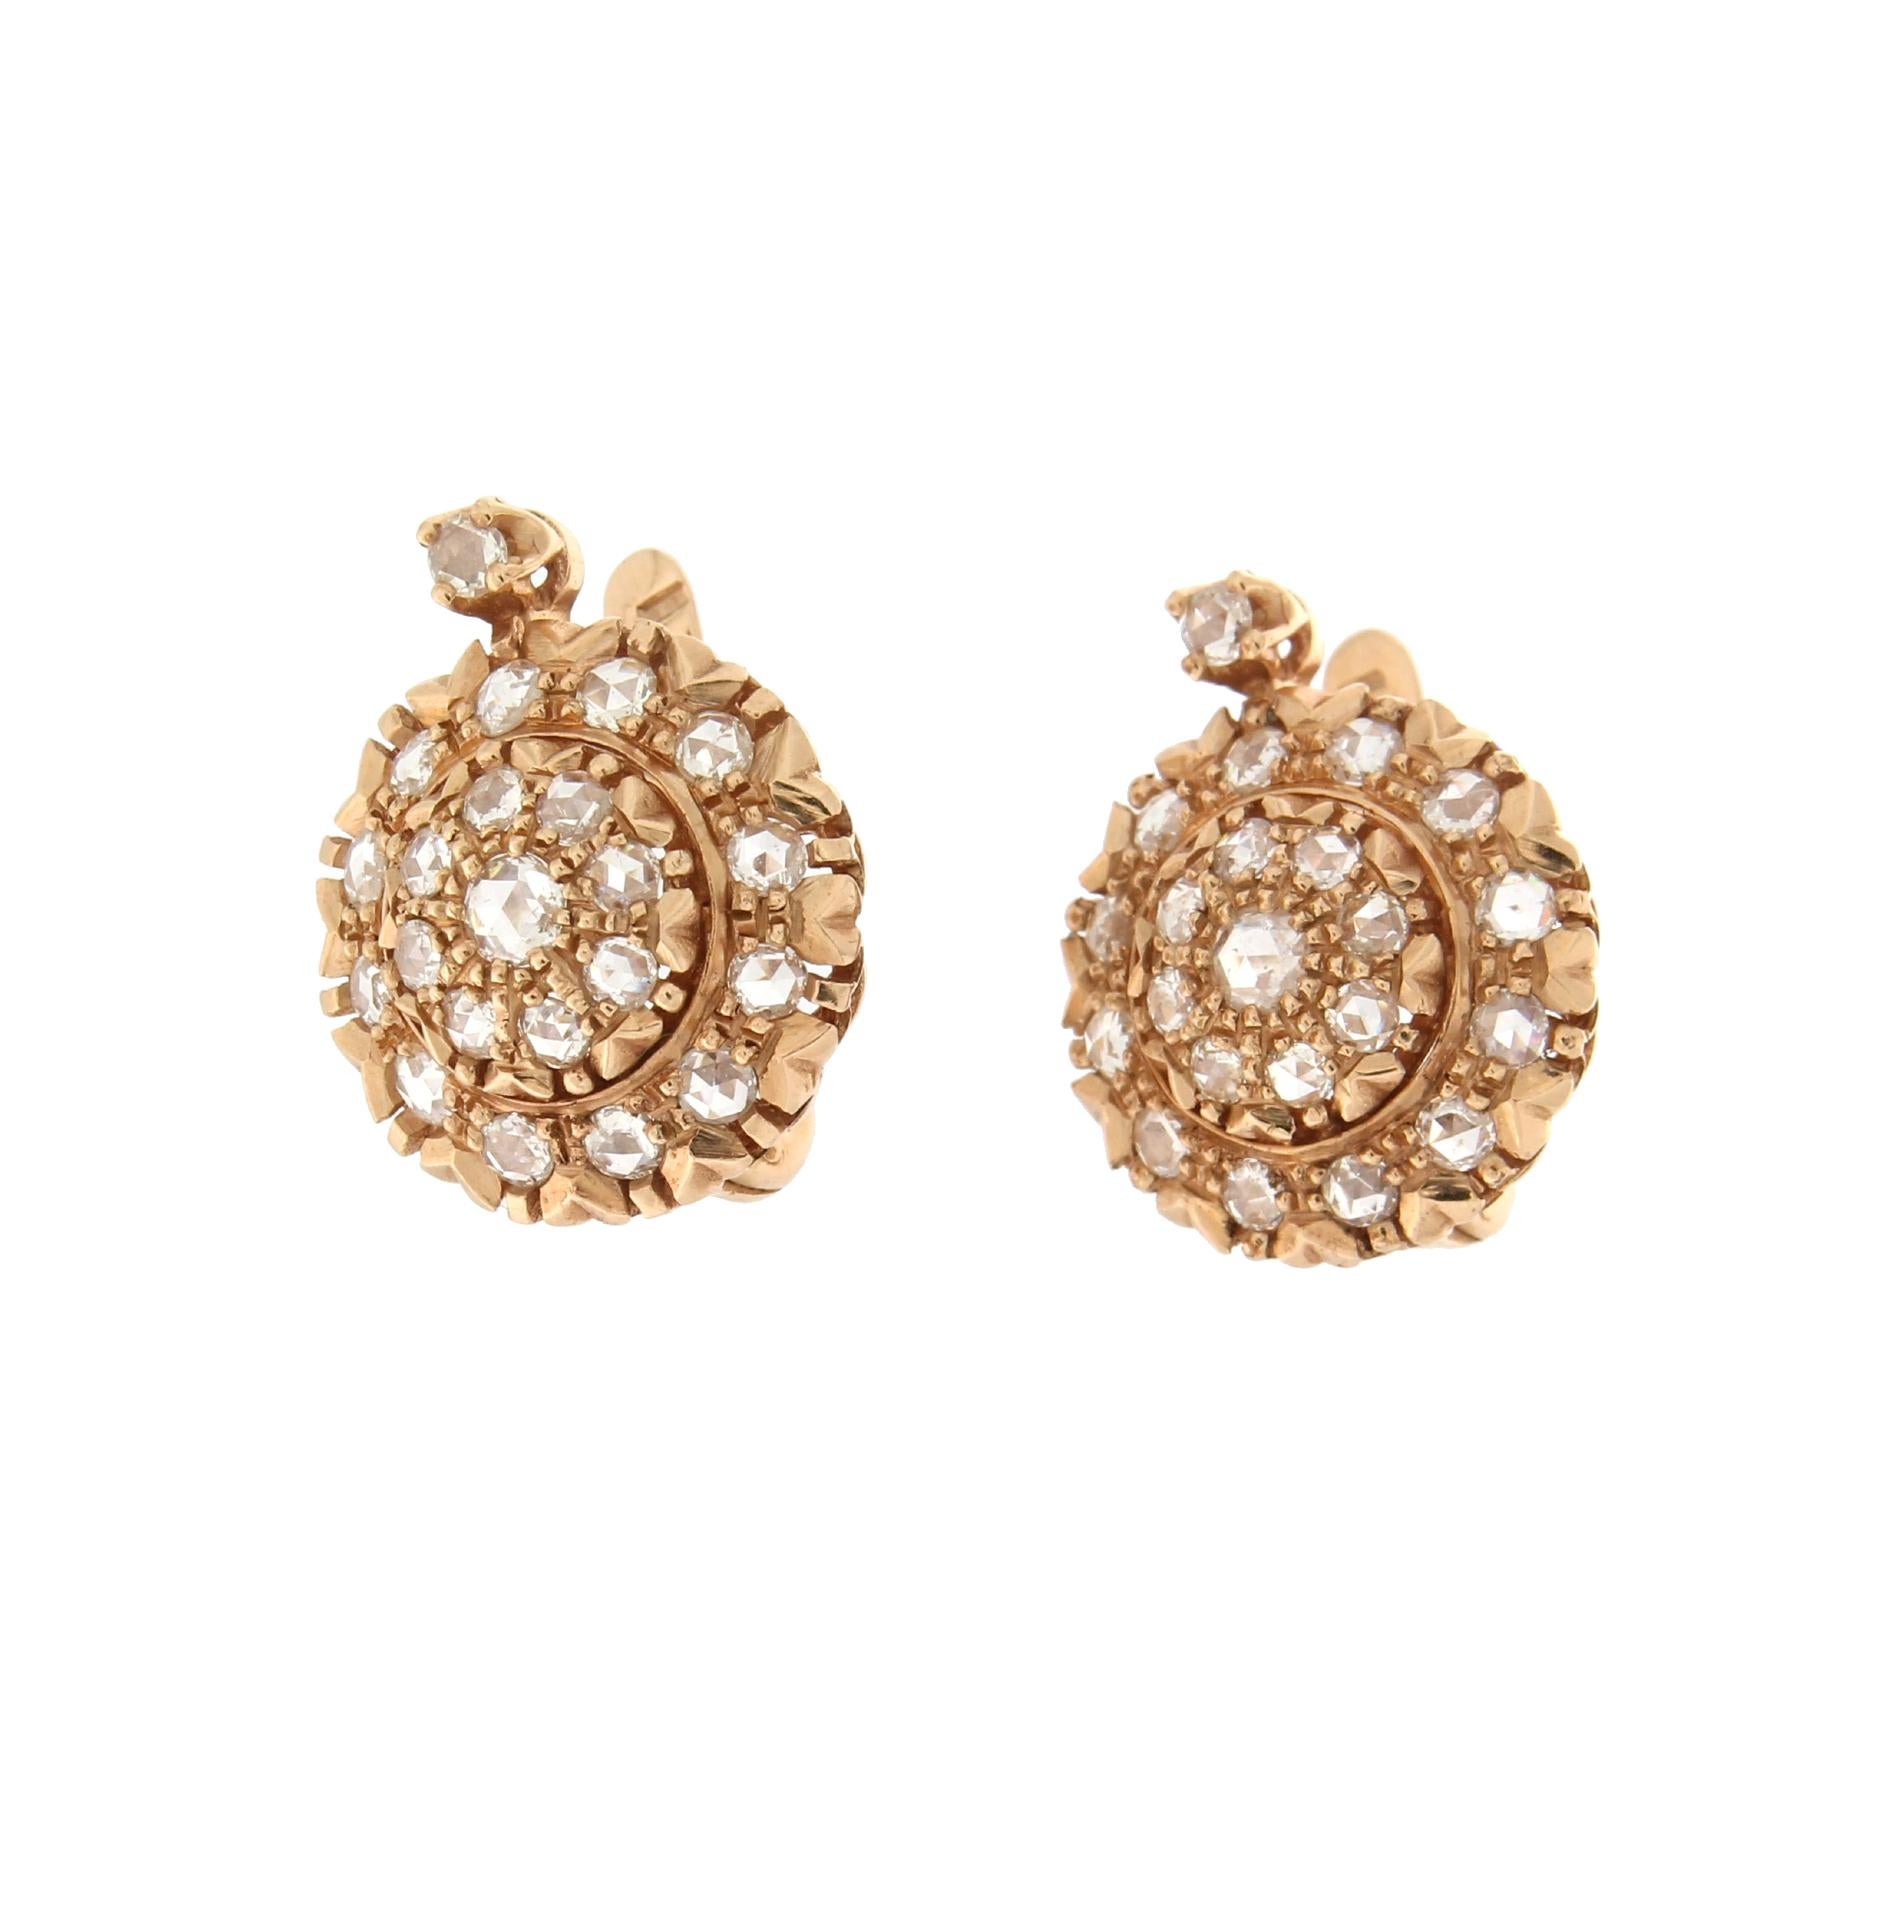 Handcraft Rose Cut Diamonds 14 Karat Yellow Gold Stud Earrings For Sale 1